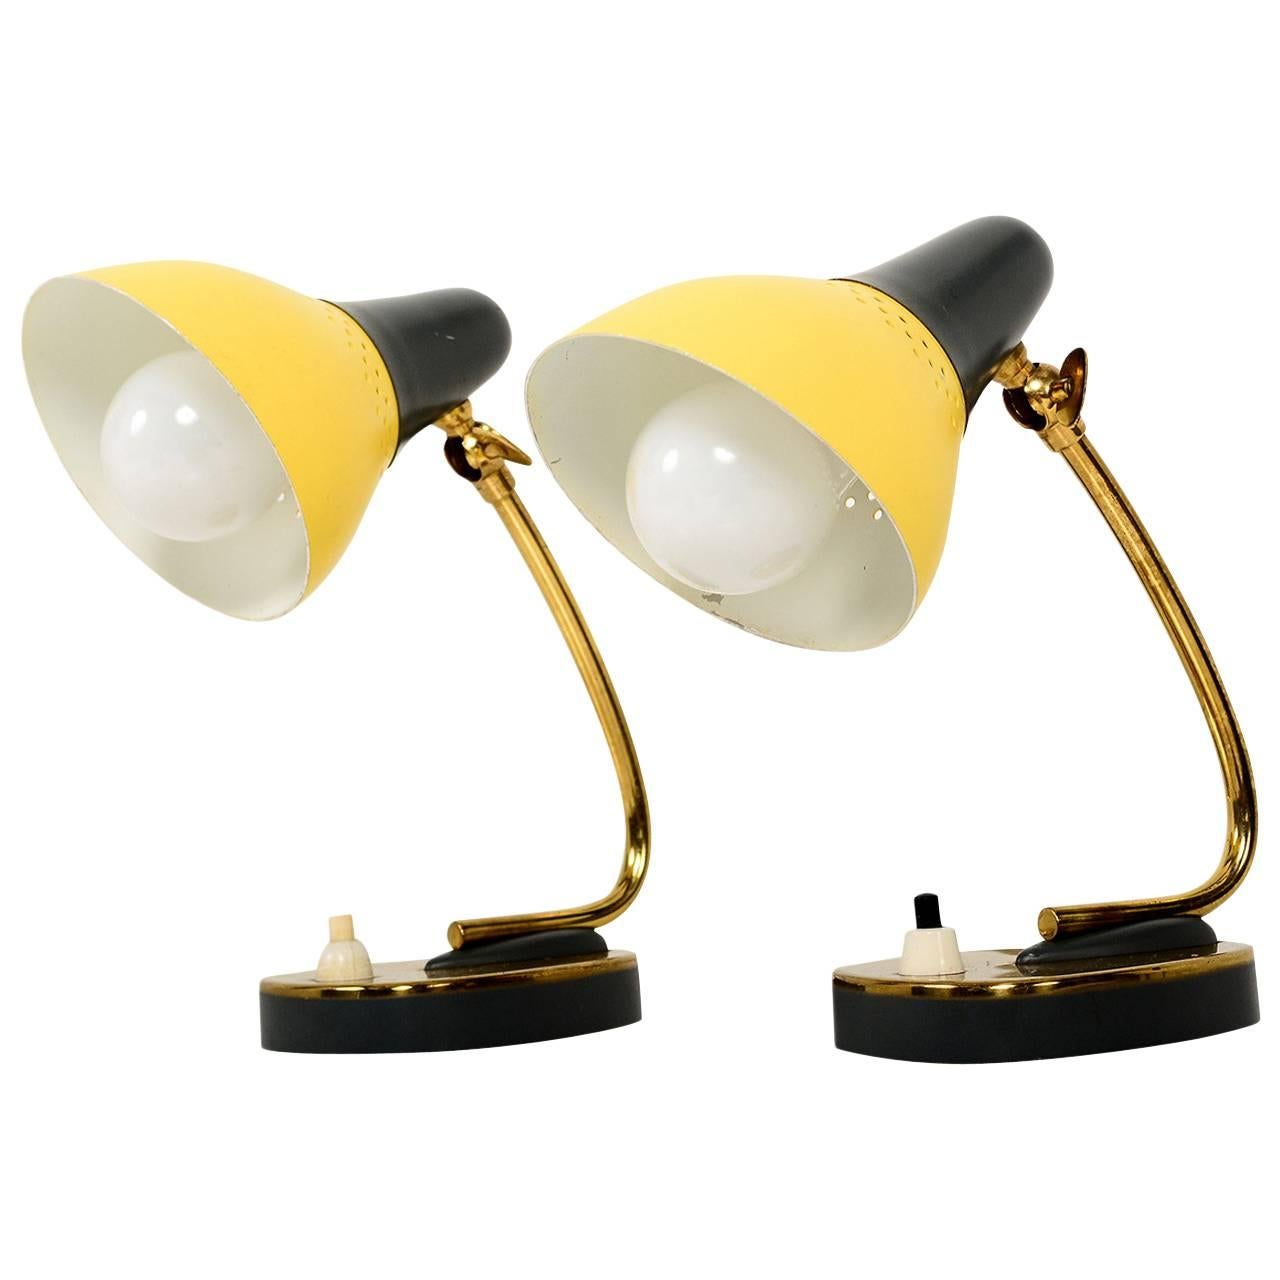 Petite Pair of Italian Table Lamps